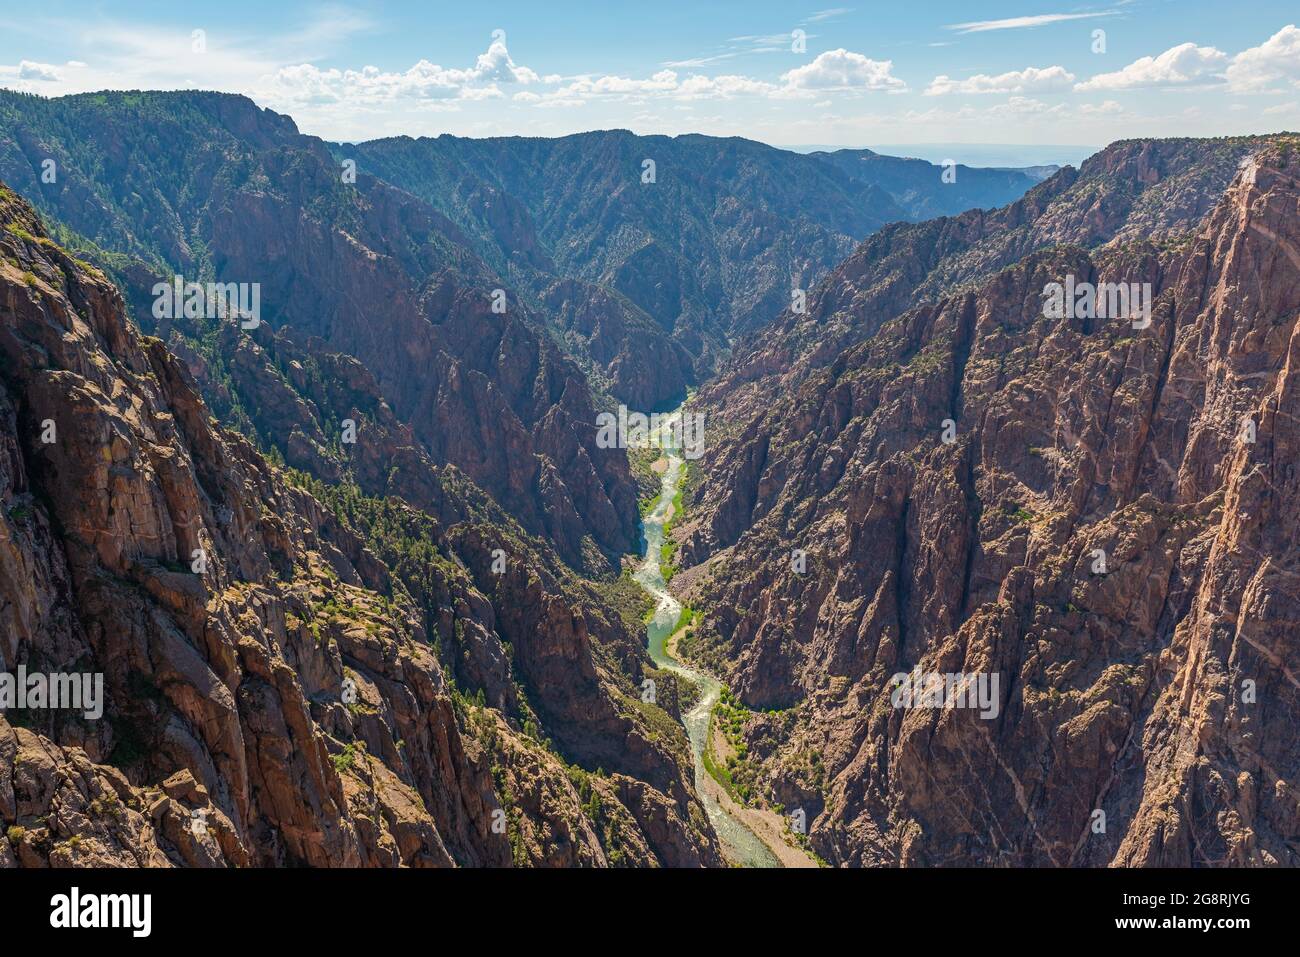 Gunnison River in den Tiefen des Black Canyon des Gunnison Nationalparks, Colorado, USA. Stockfoto